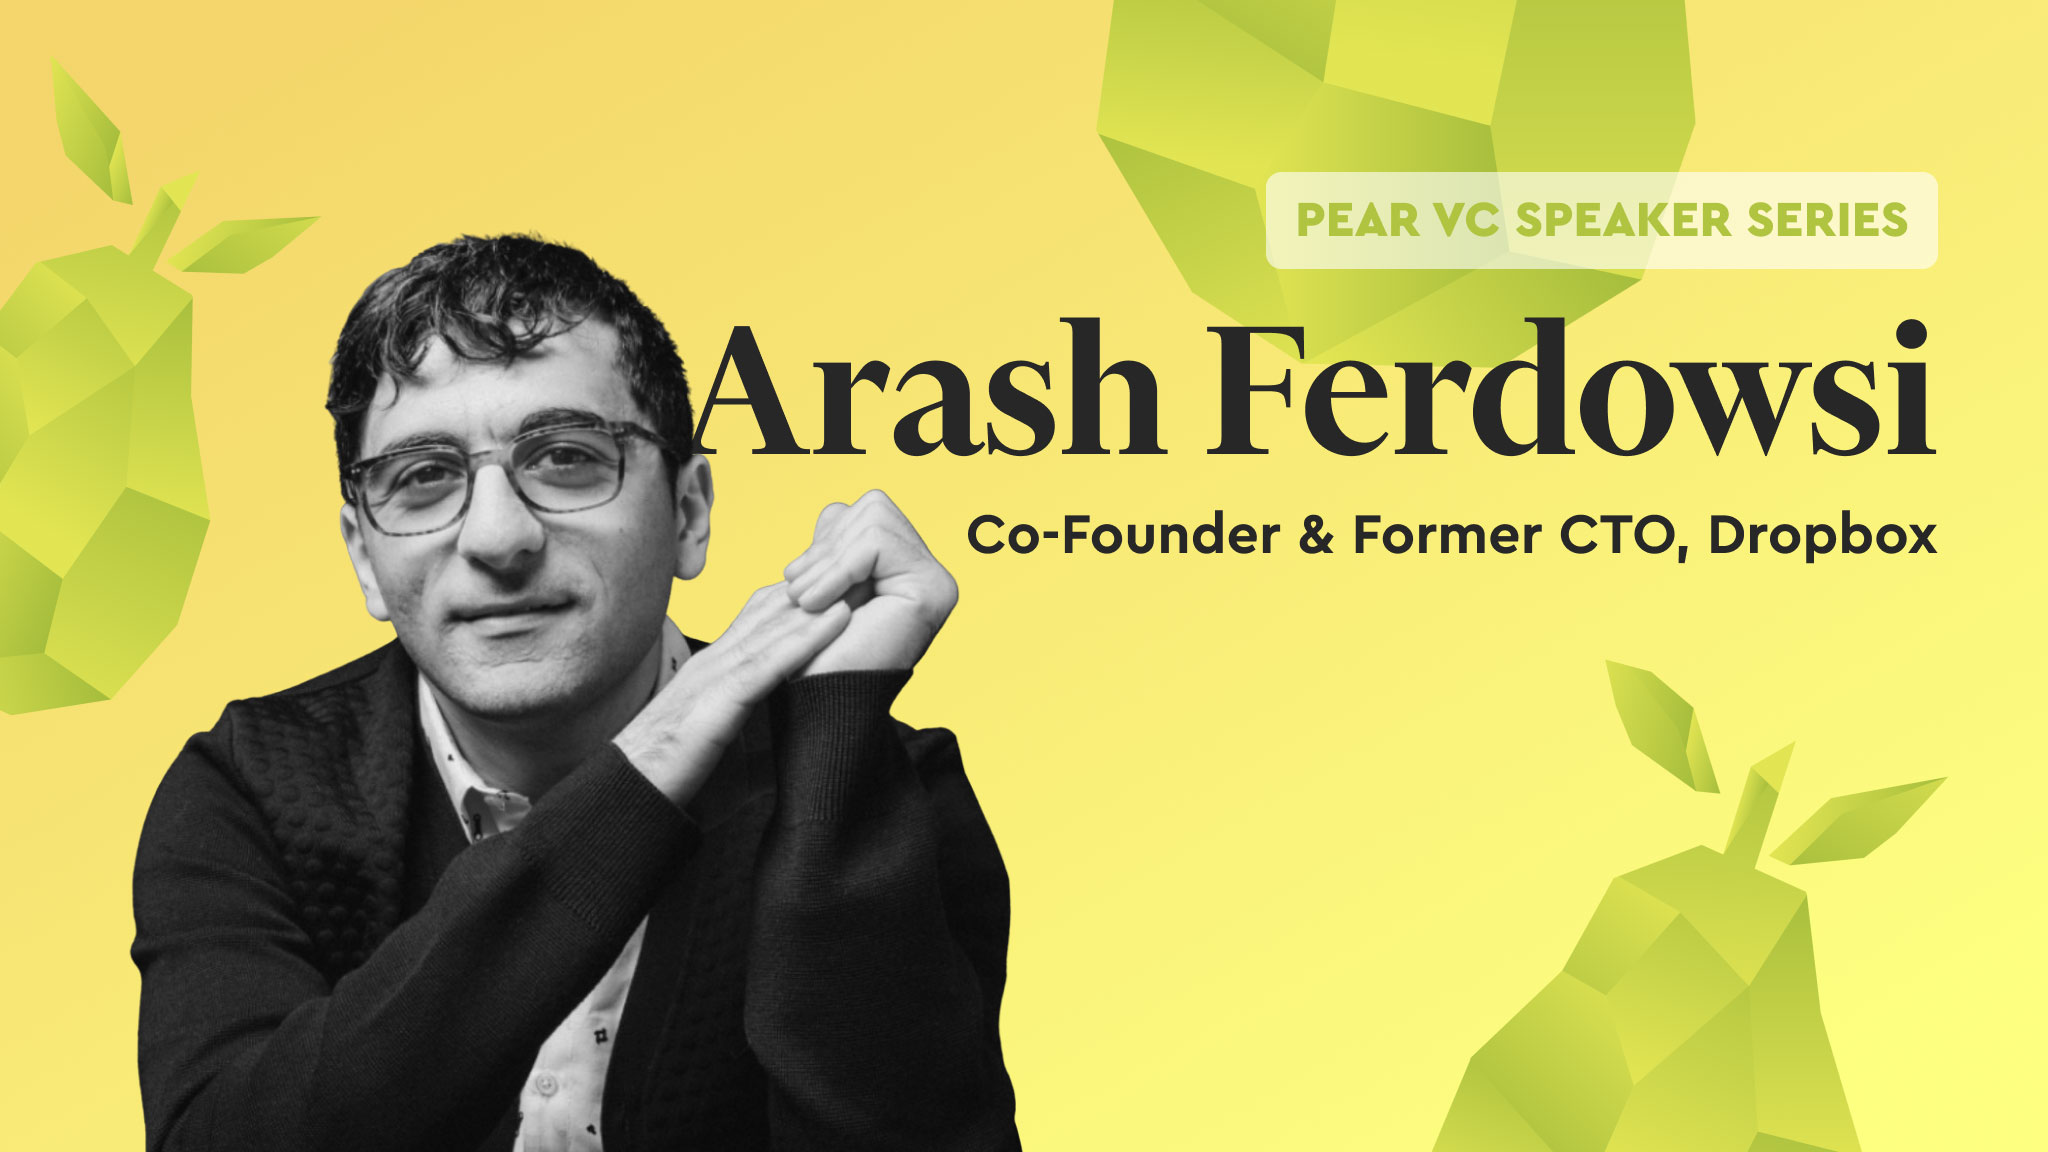 Pear VC Speaker Series: Arash Ferdowsi